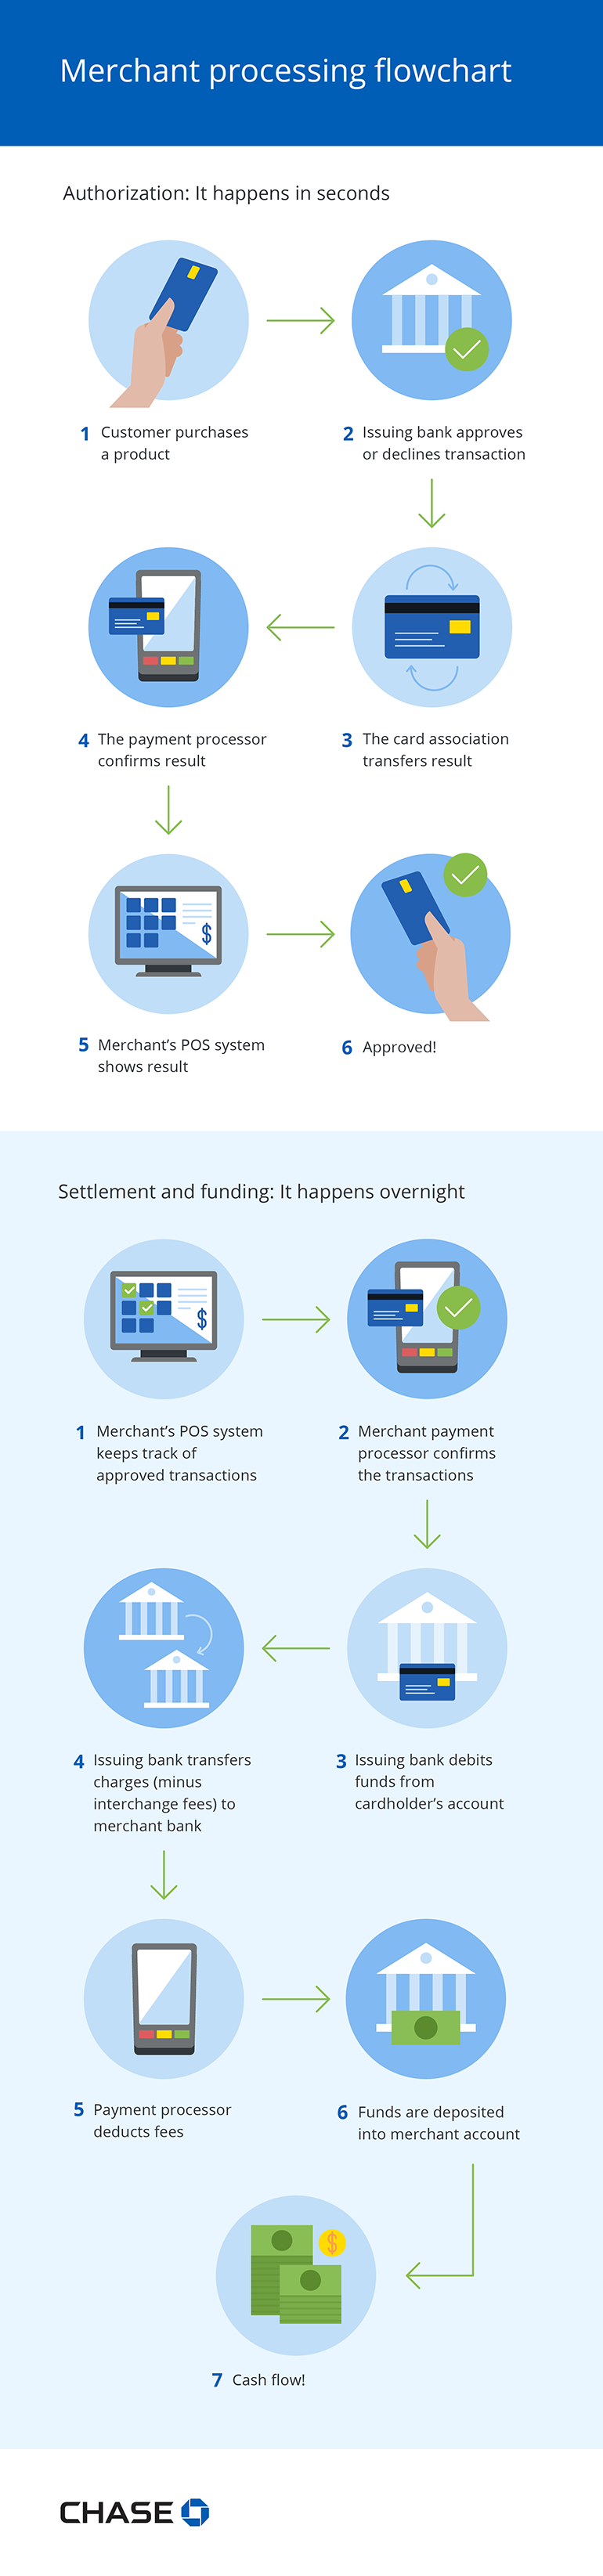 Infographic illustrating the merchant processing flowchart